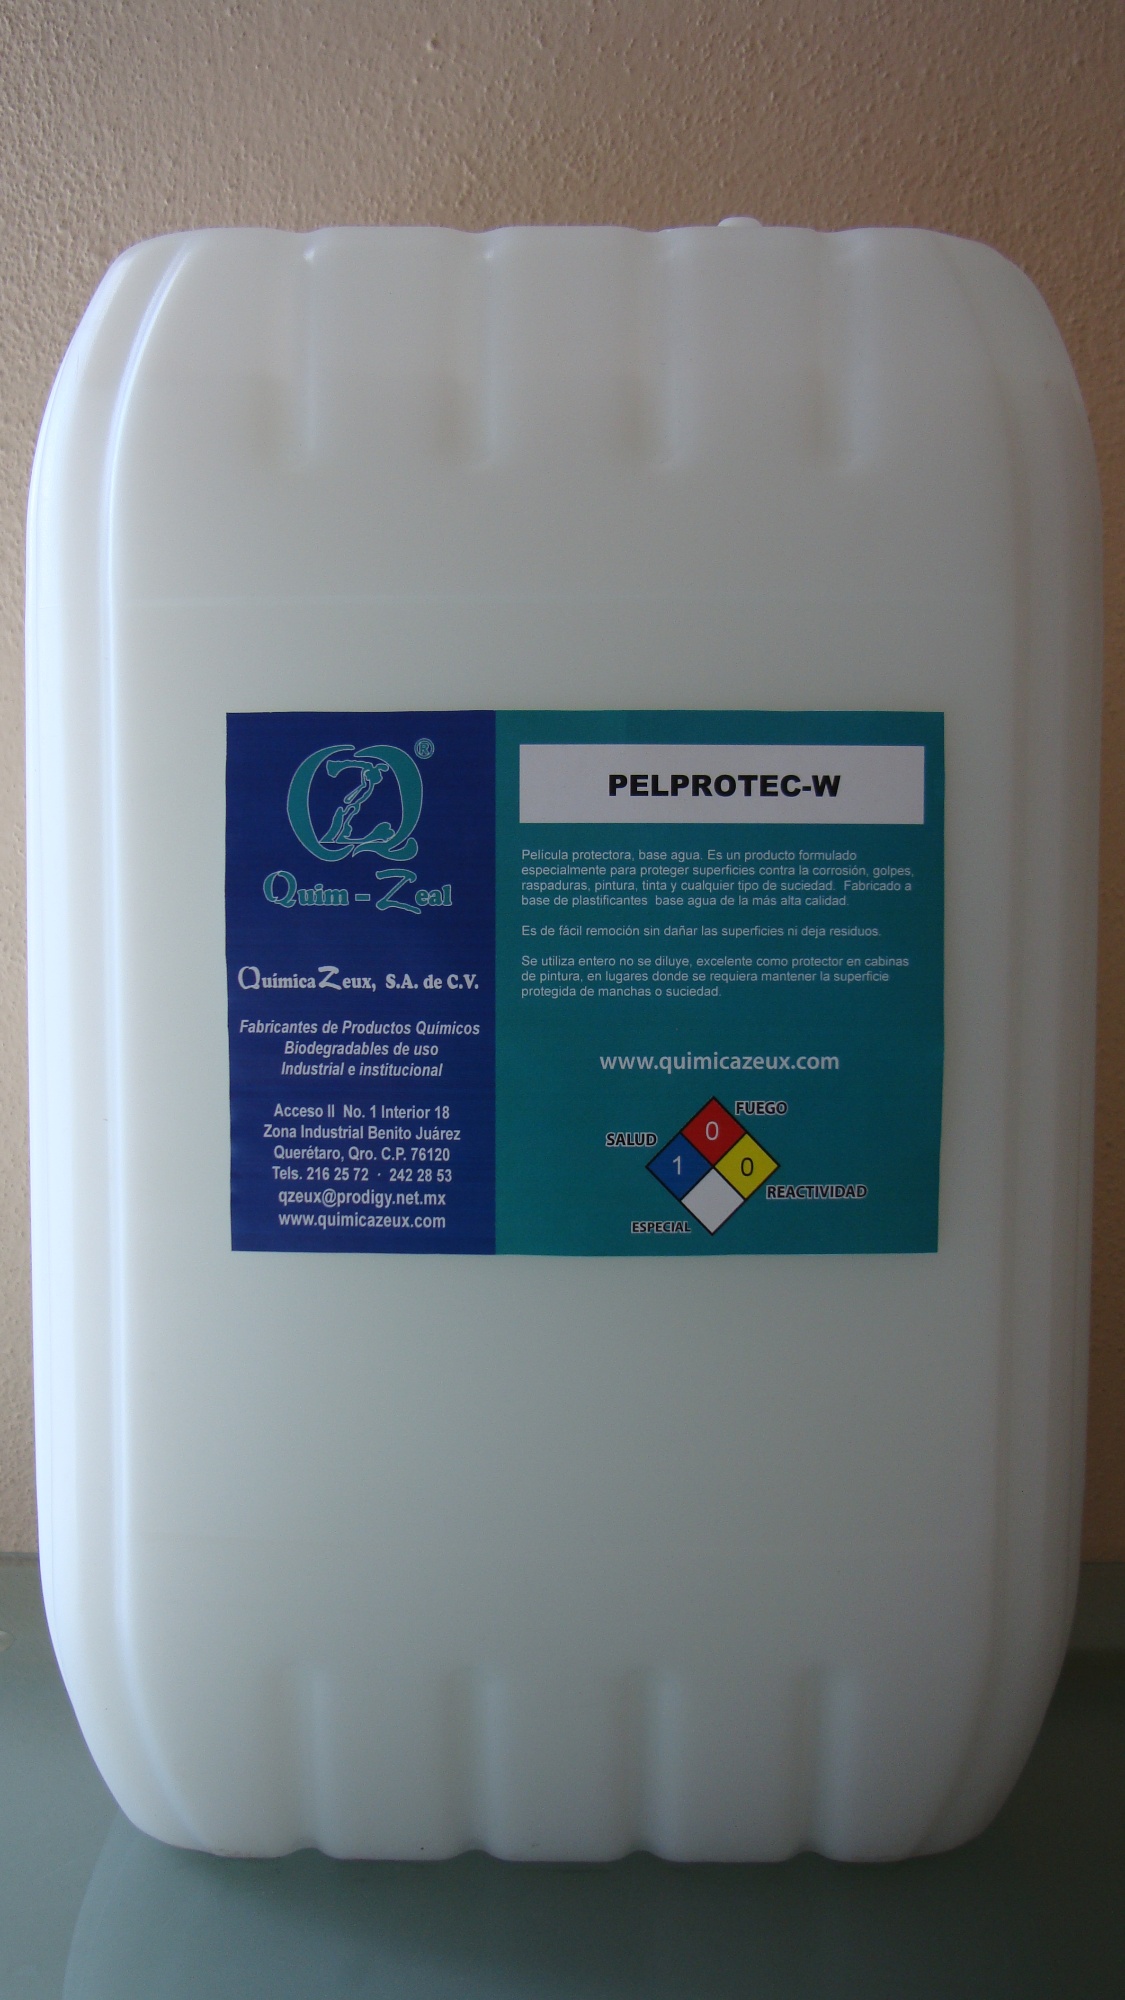 PELPROTEC-W (Película protectora base agua)